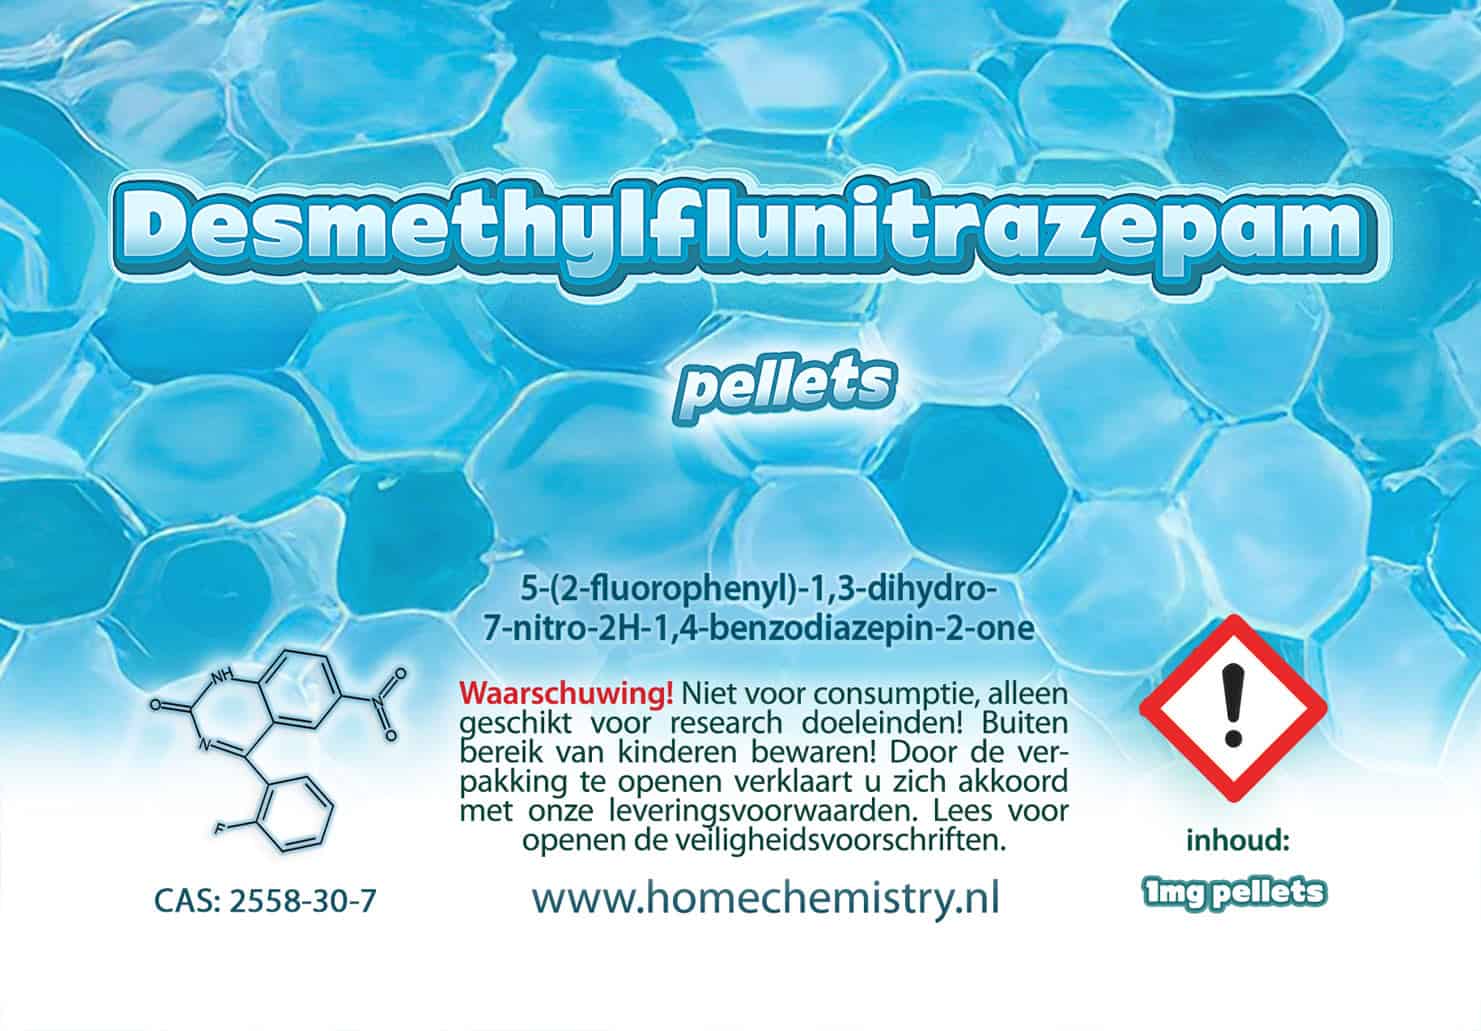 Desmethylflunitrazepam kopen - pellets 15x1mg